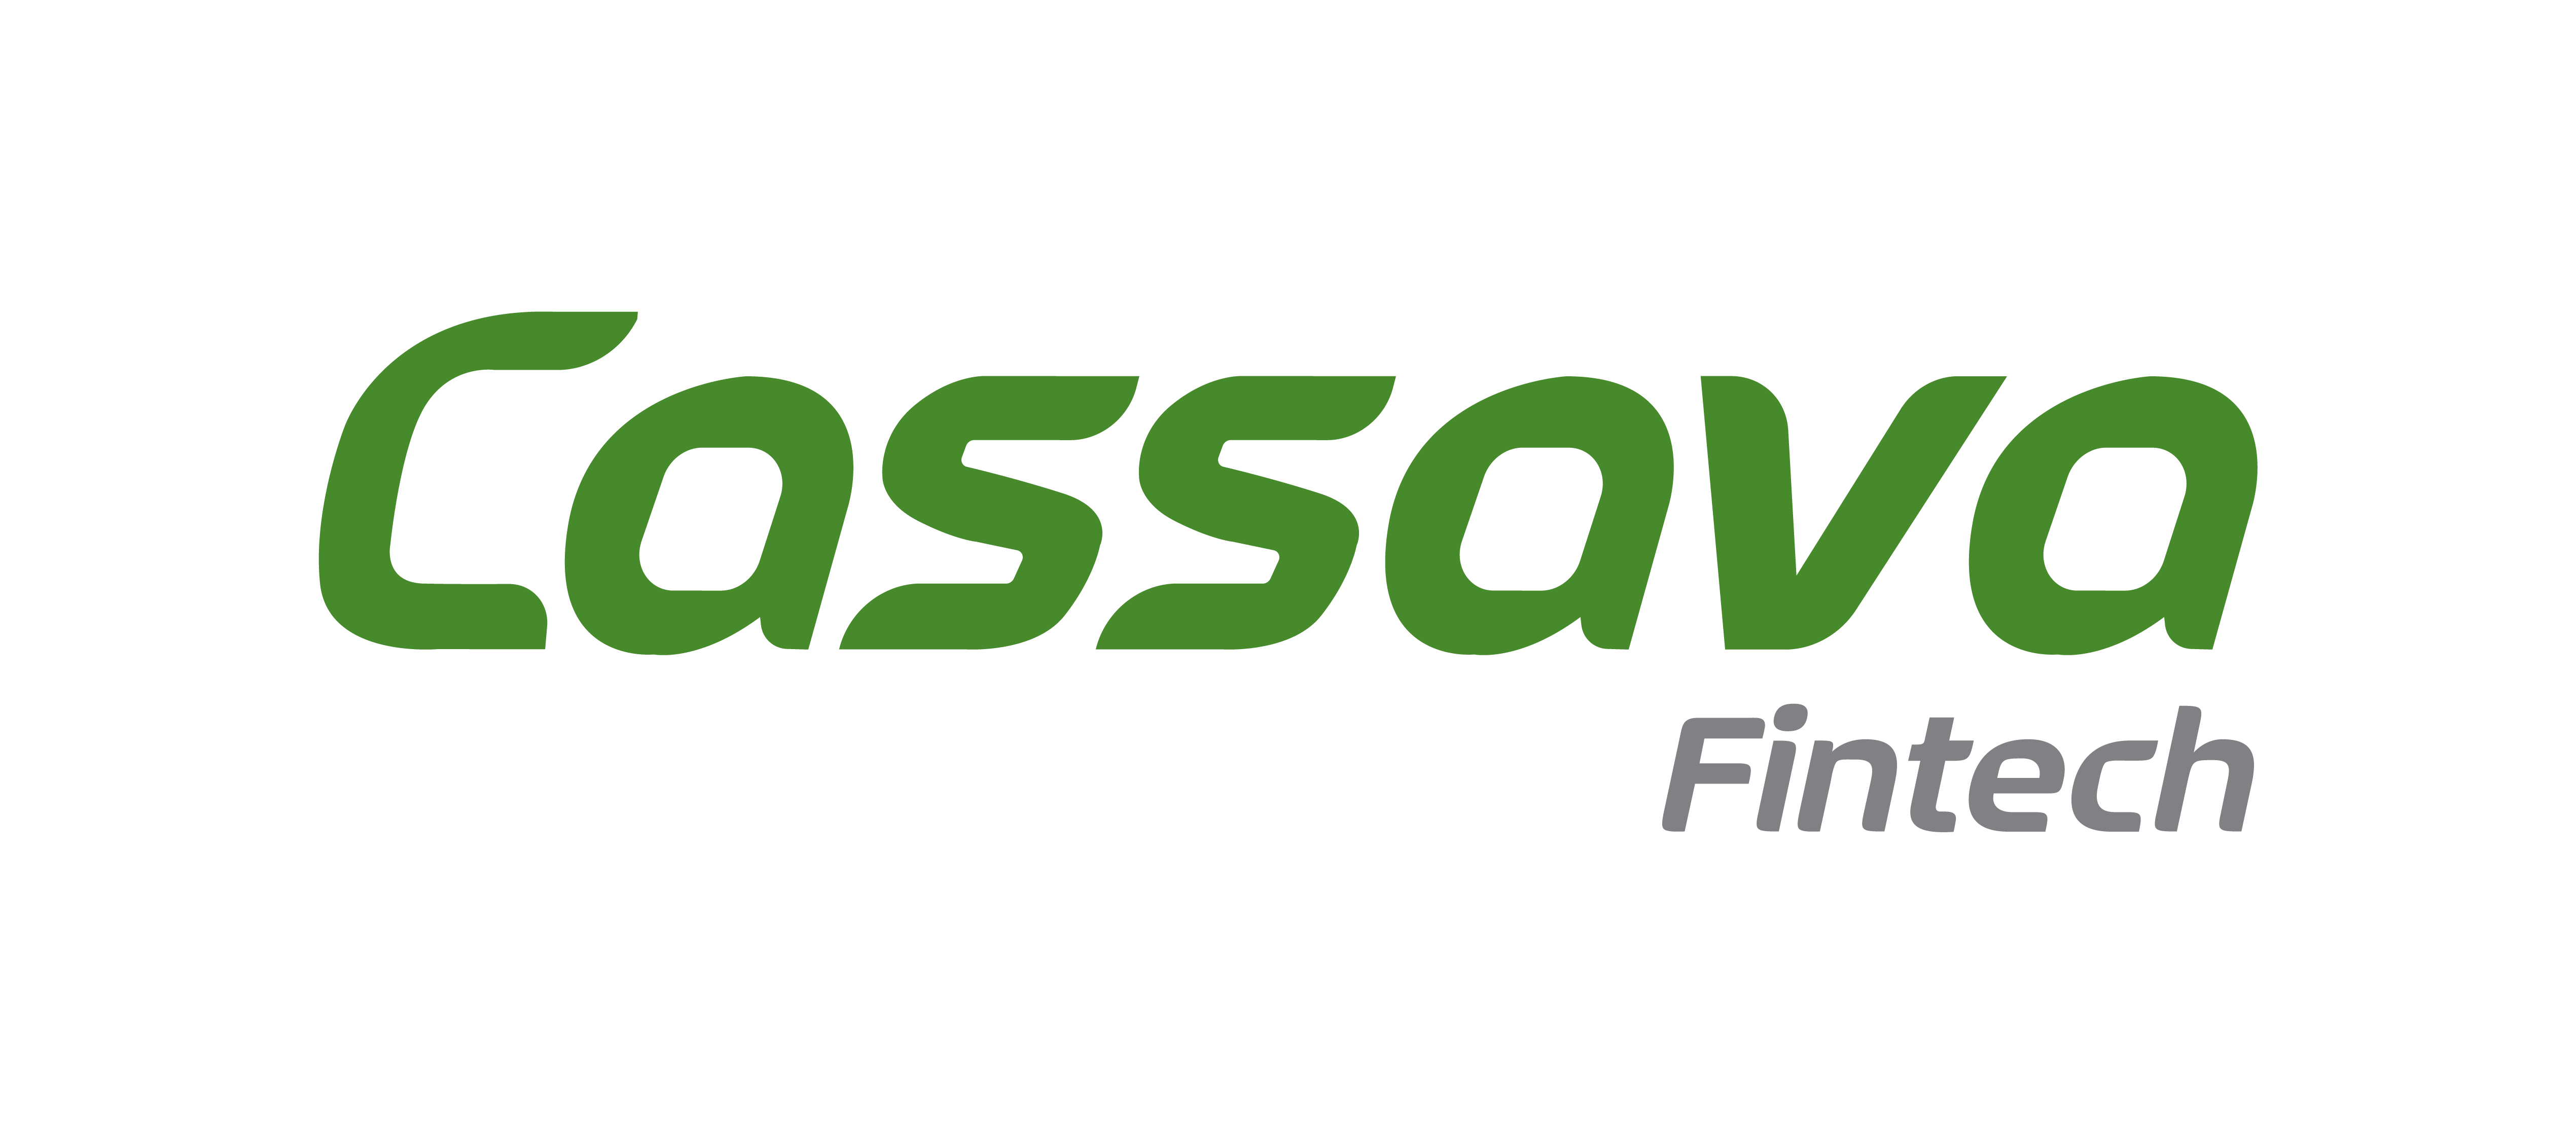 Cassava makes history